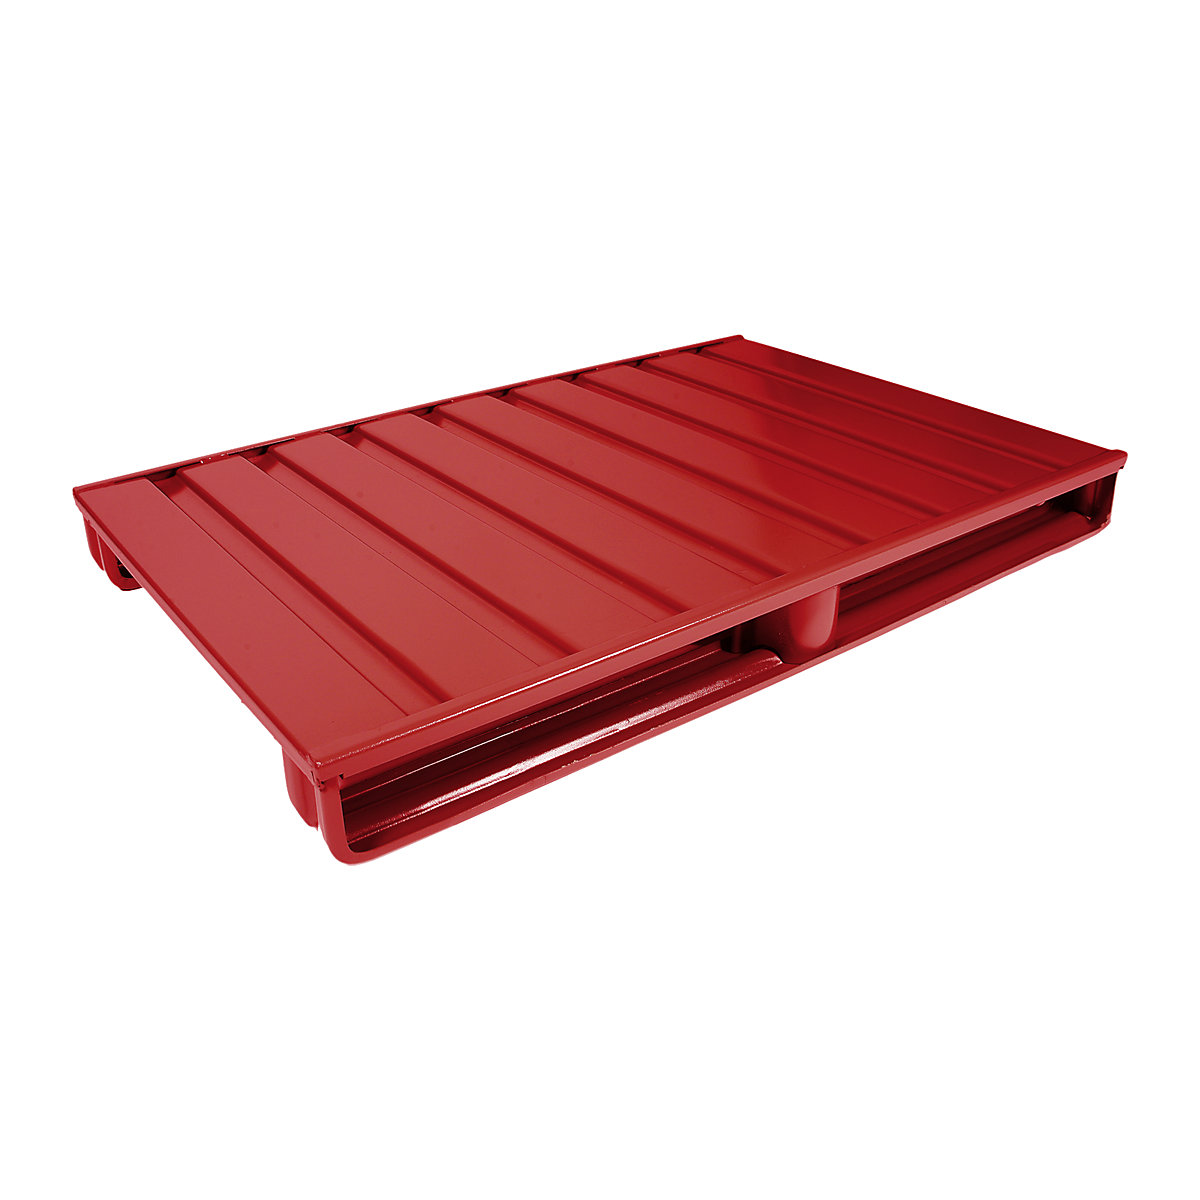 Ploska jeklena paleta – Heson, DxŠ 1200 x 1000 mm, nosilnost 2000 kg, ognjeno rdeče barve, od 10 kosov-1